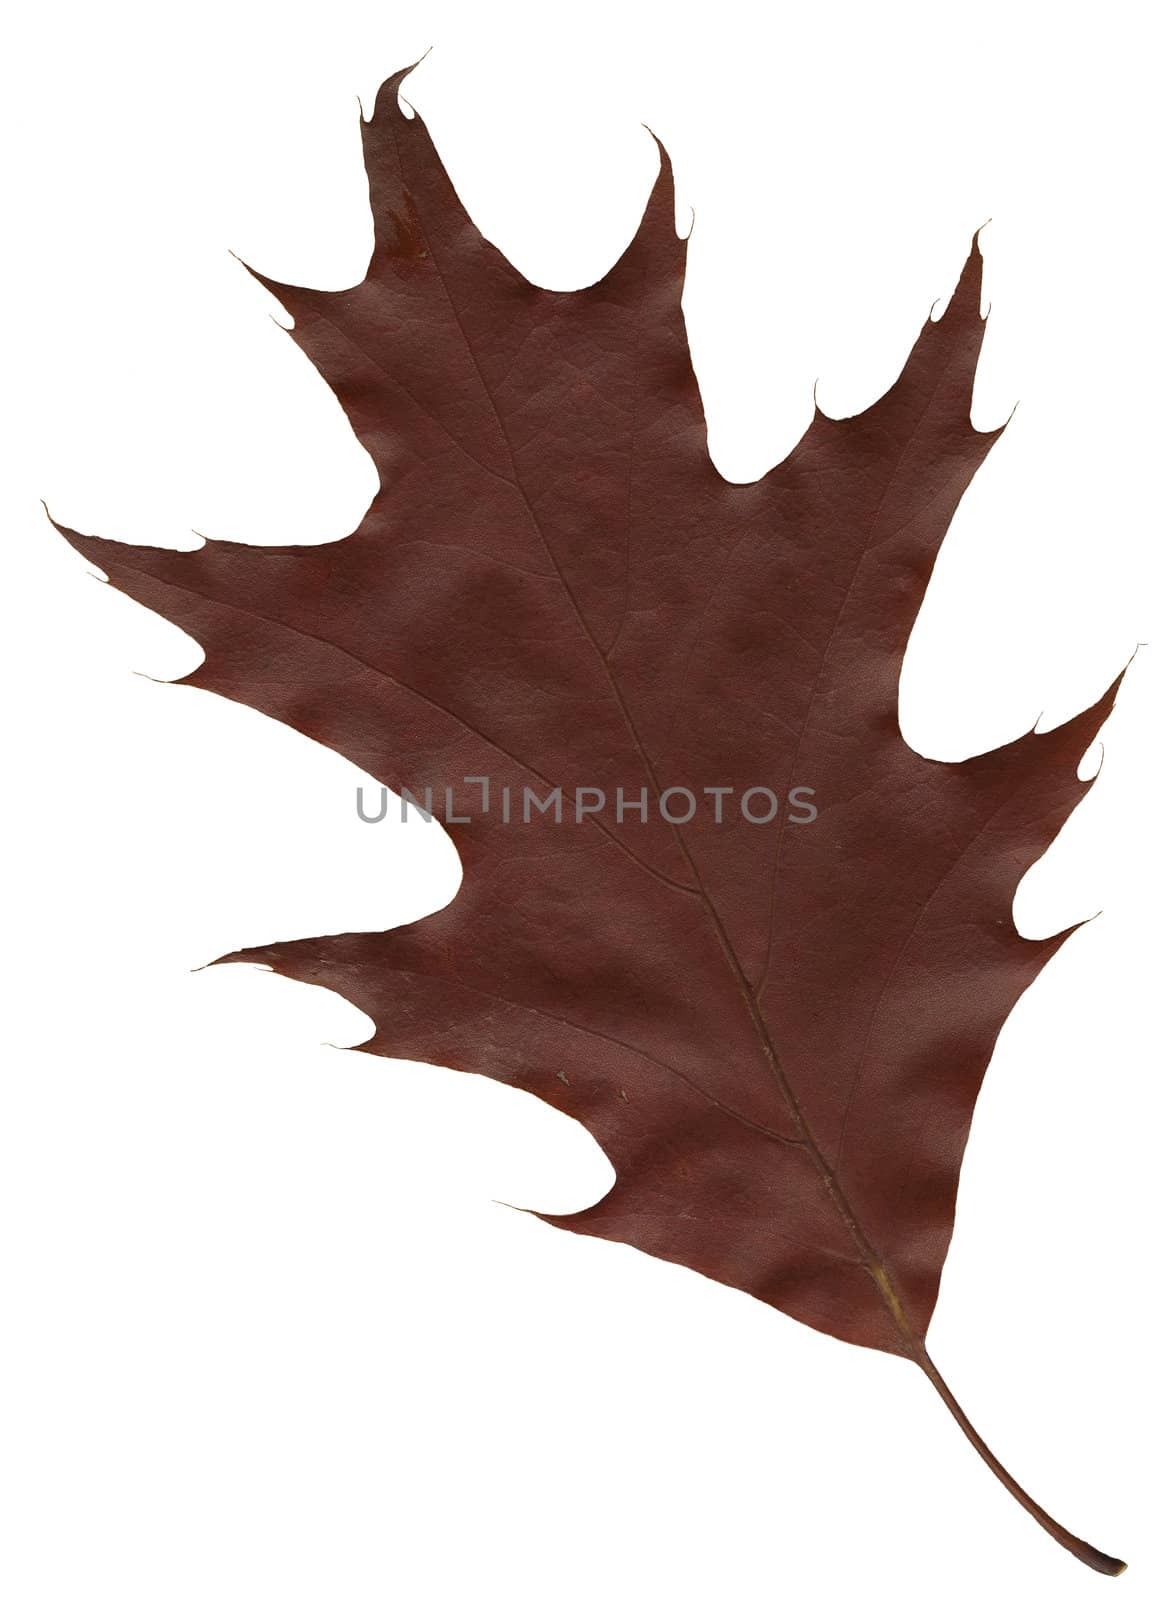 isolated autumnally colored oak leaf on white background